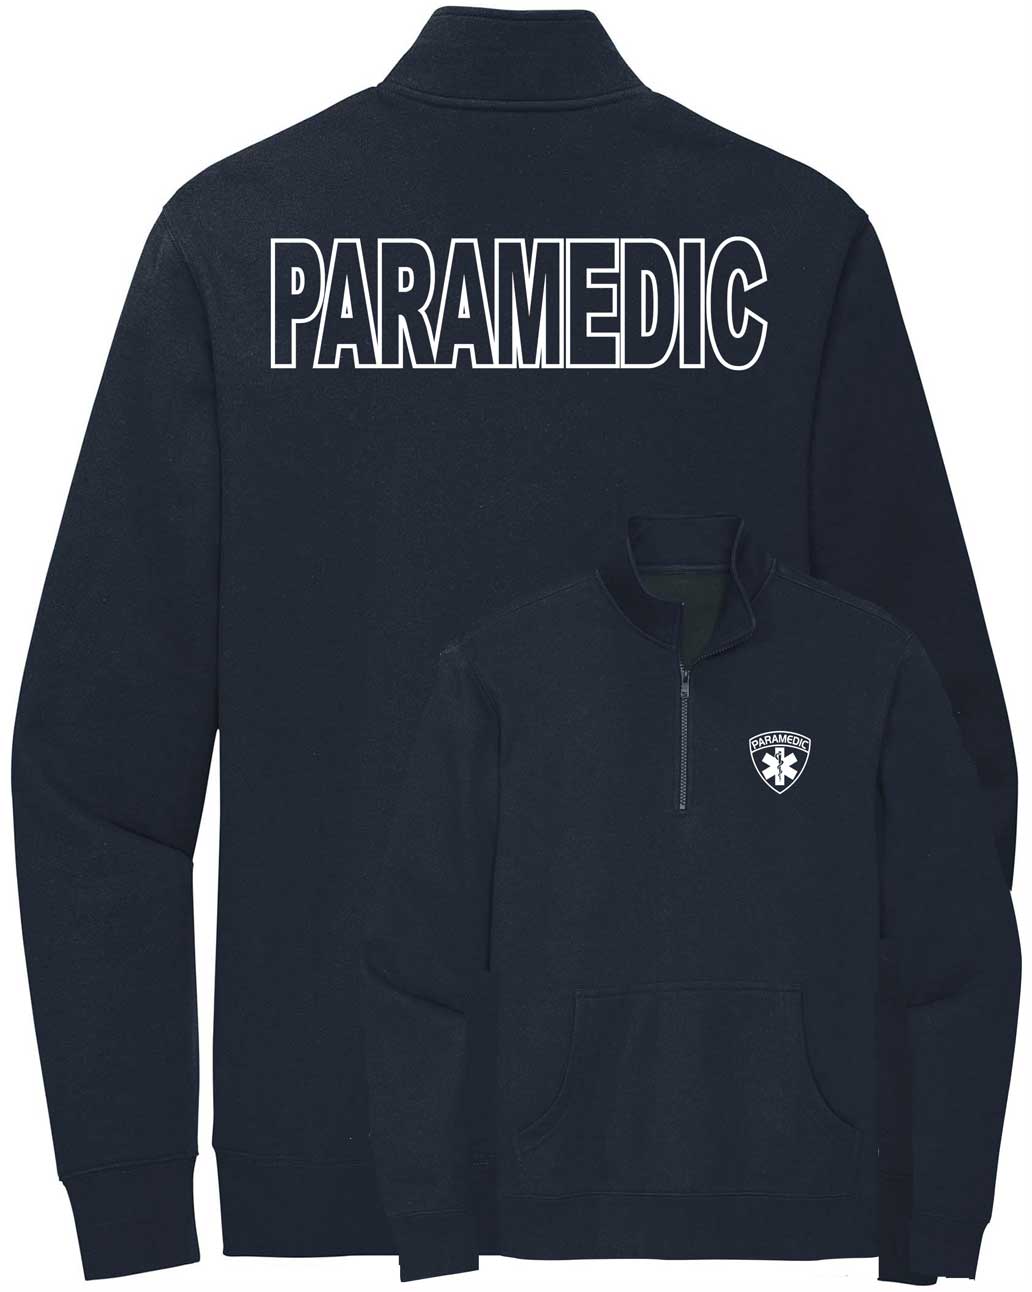 paramedic-navy.jpg